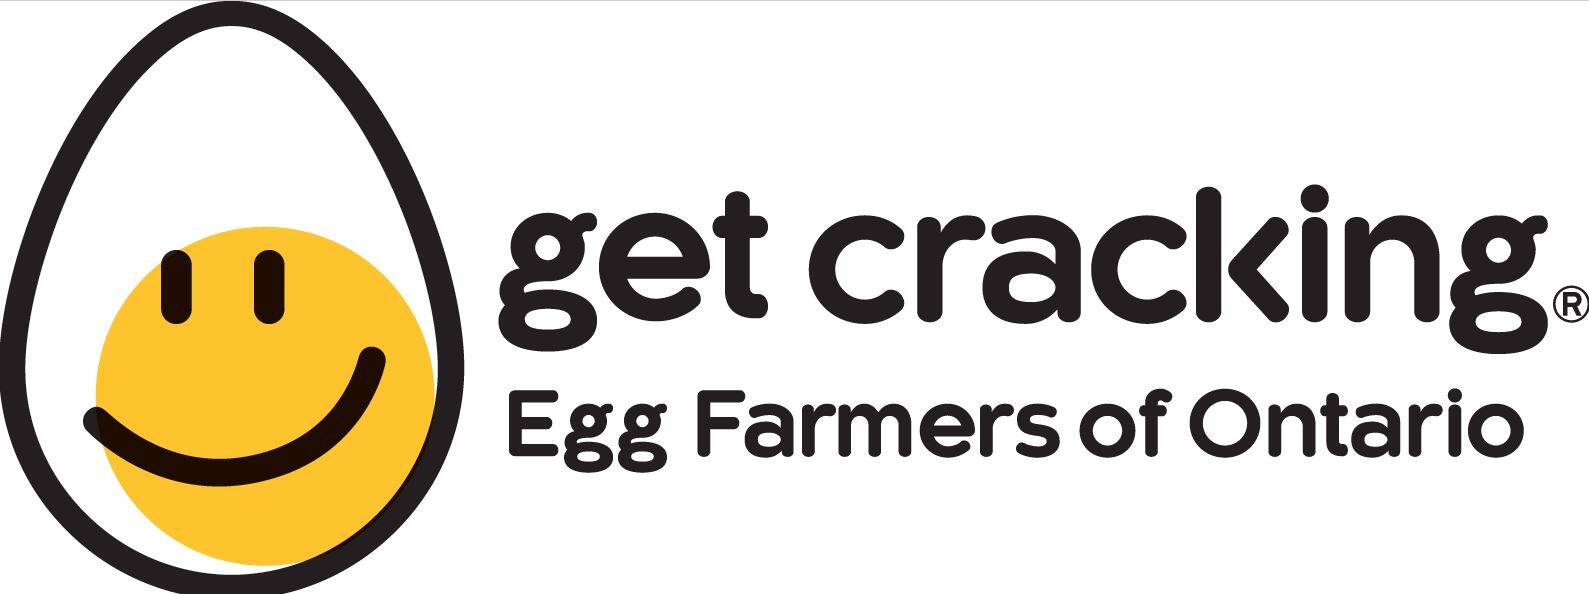 Zone Three Egg Farmers of Ontario